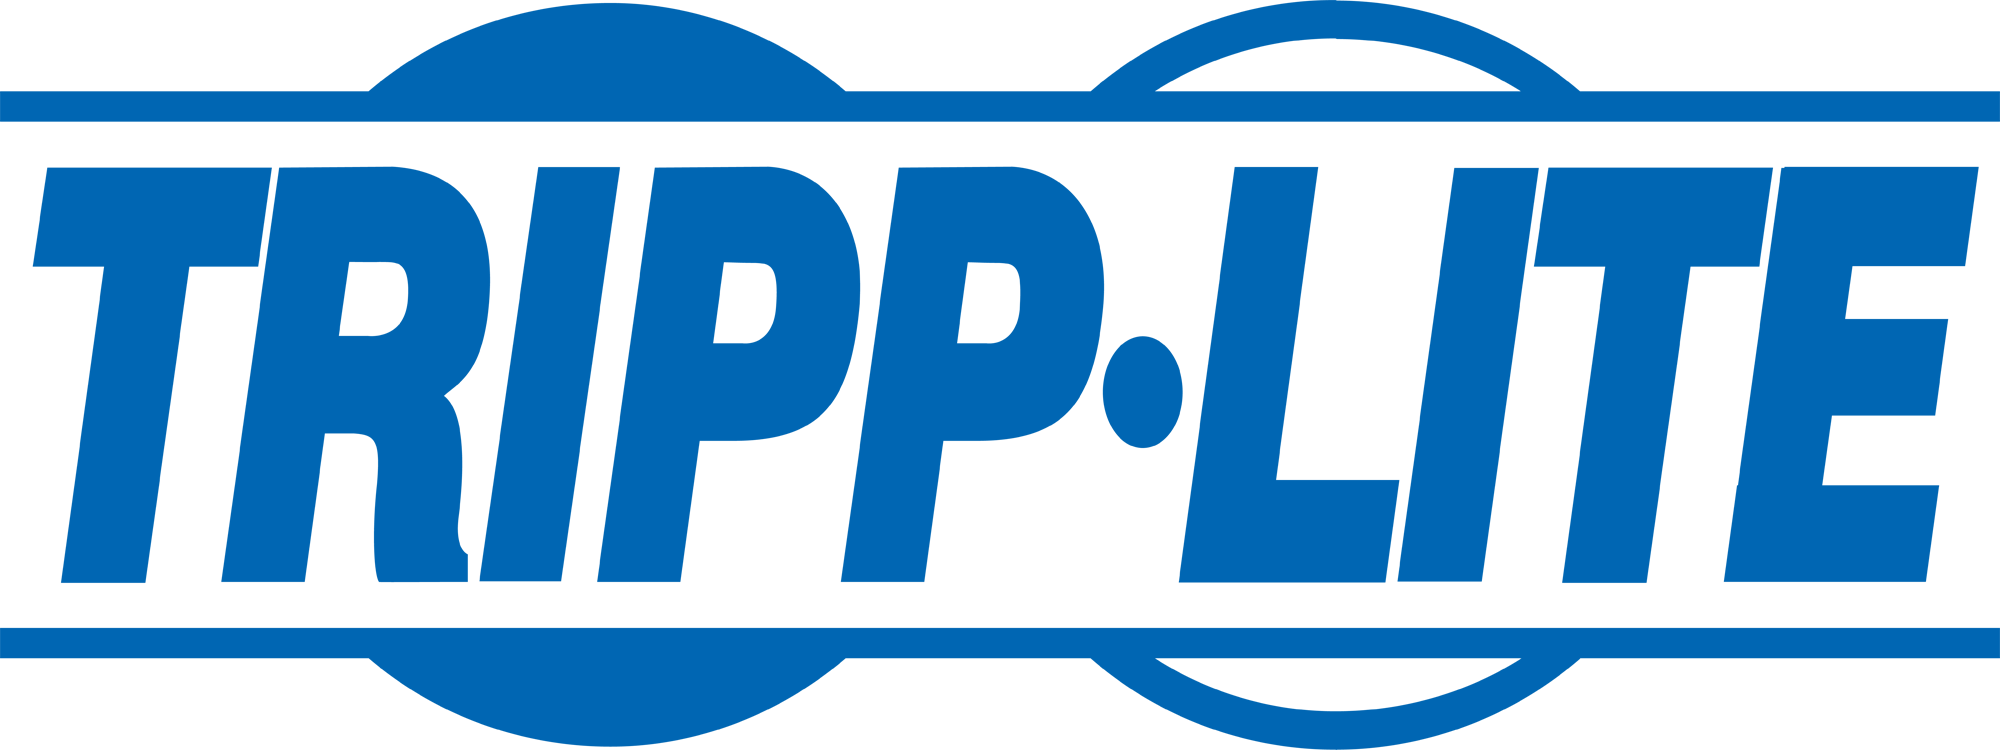 Digital Links Logo photo - 1